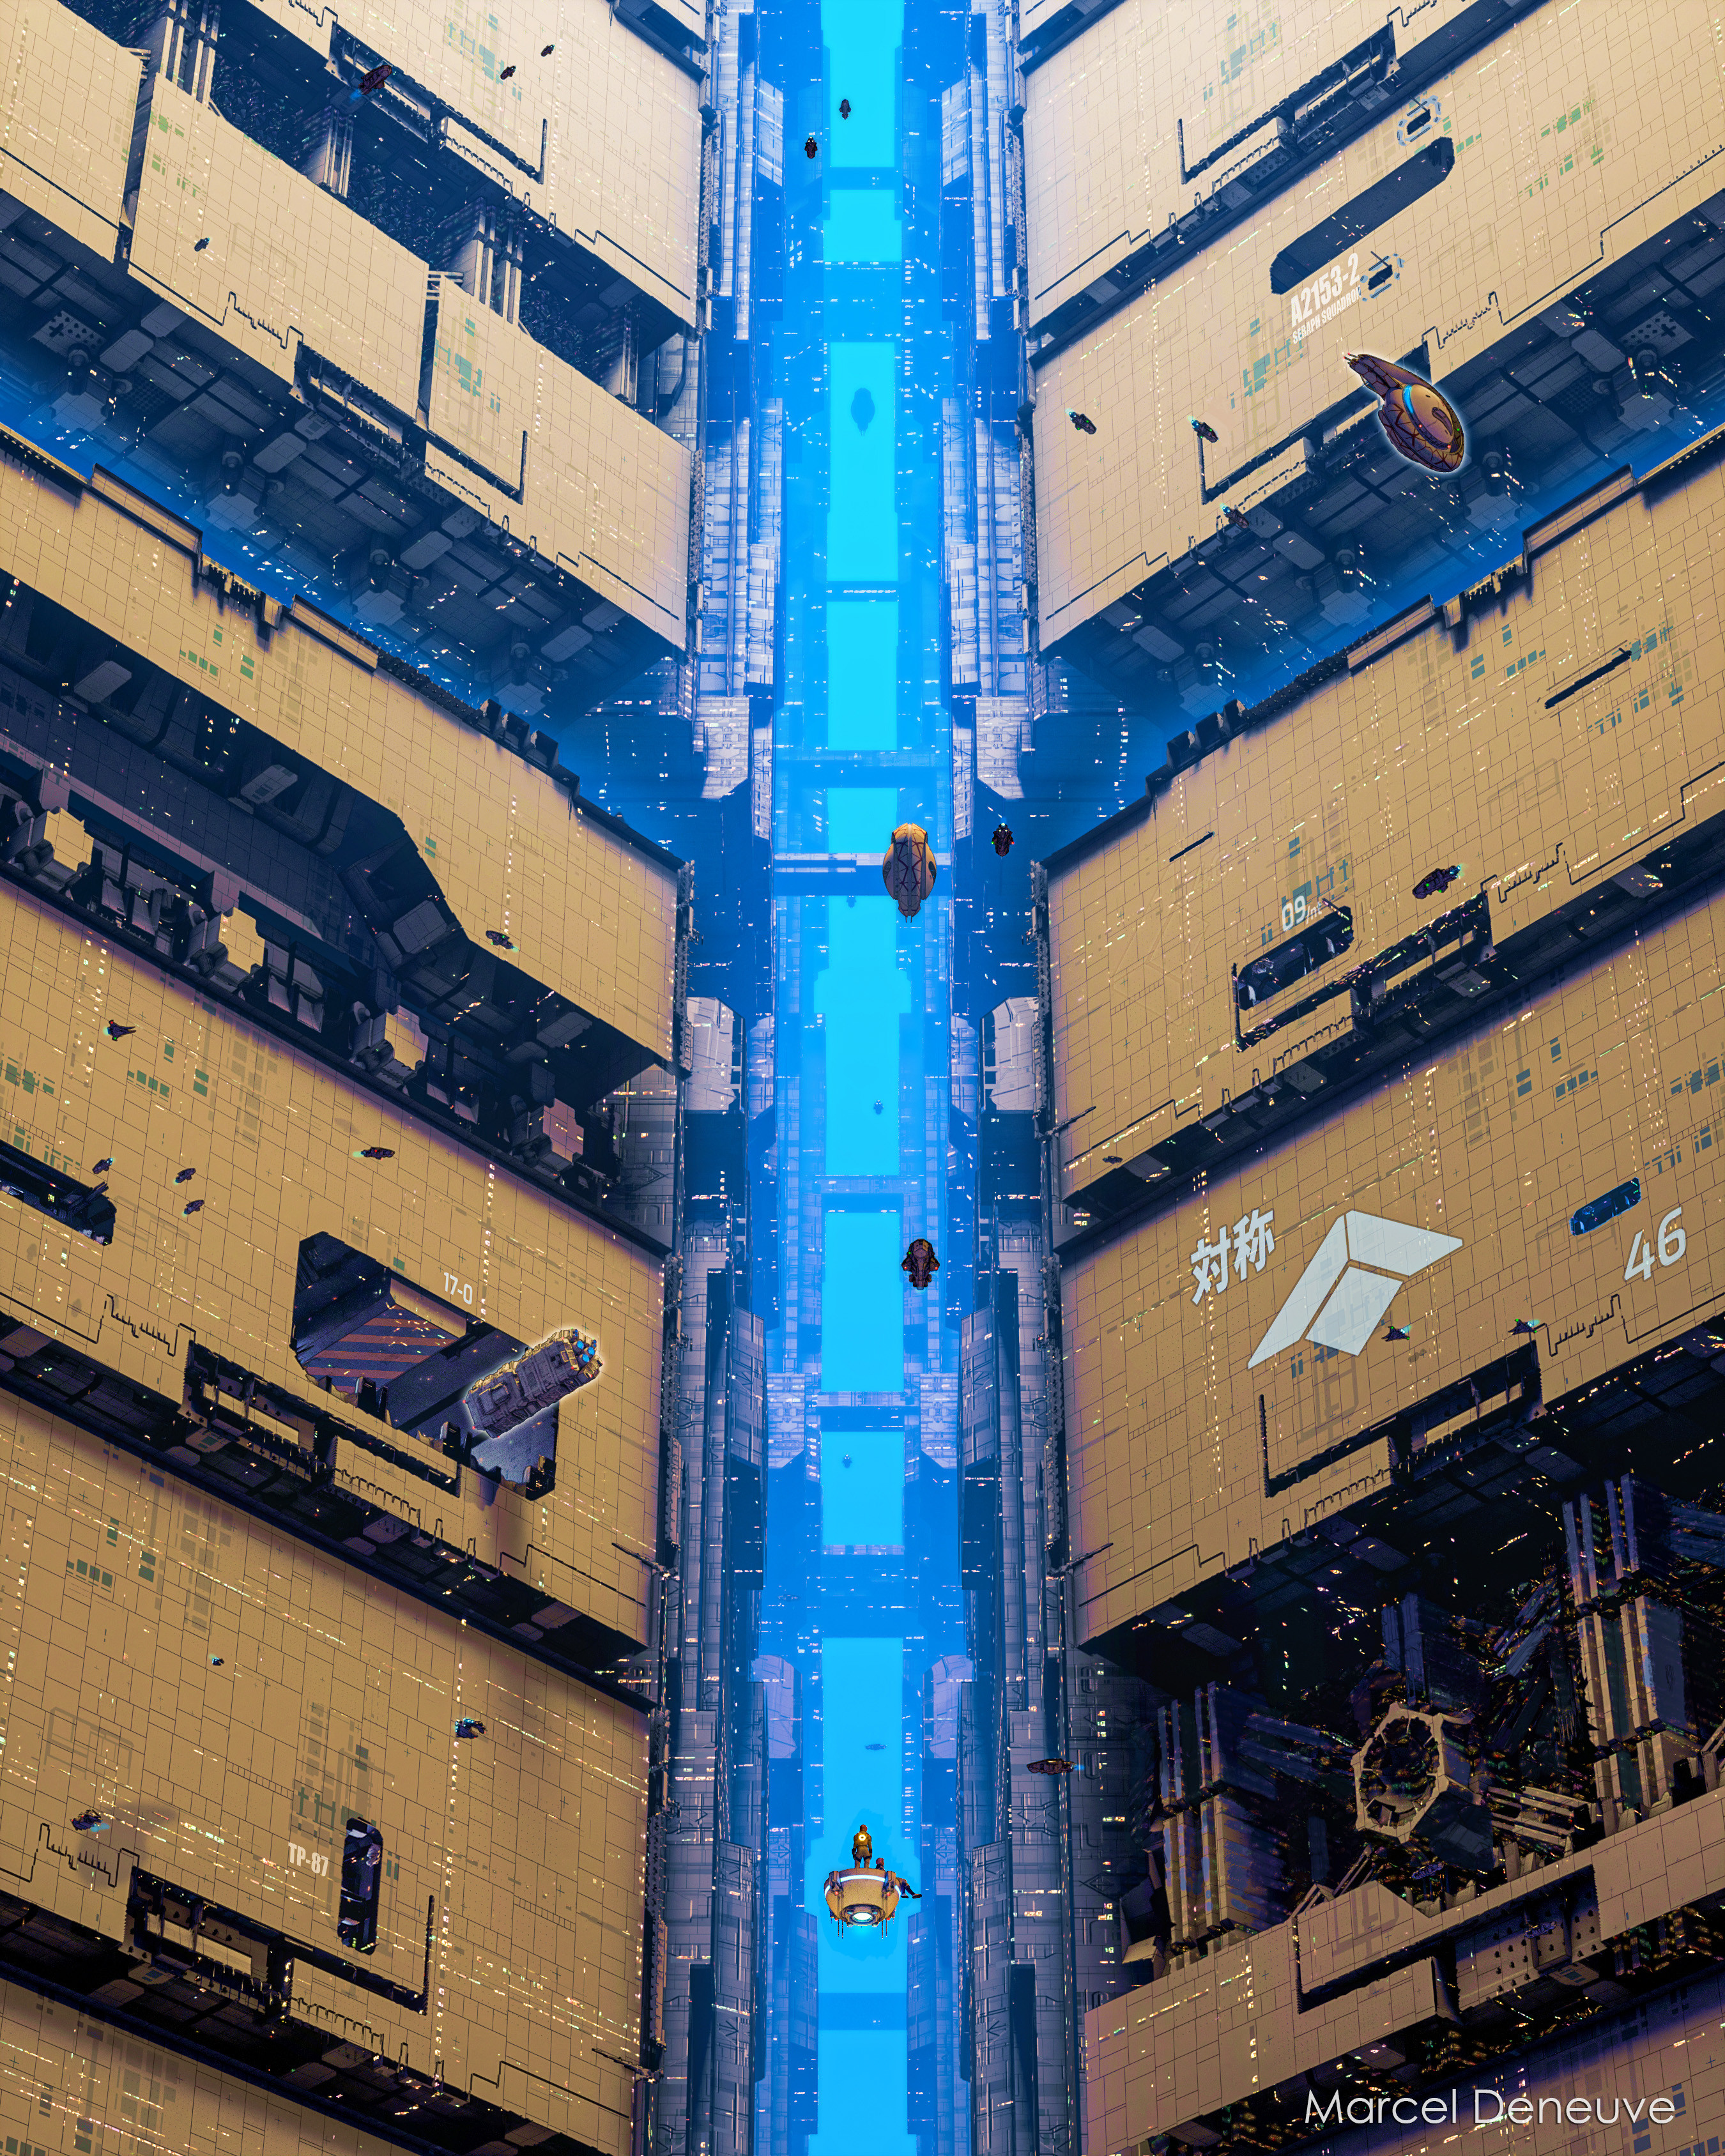 General 2700x3375 digital art artwork illustration concept art architecture building futuristic futuristic city cyberpunk spaceship Marcel Deneuve